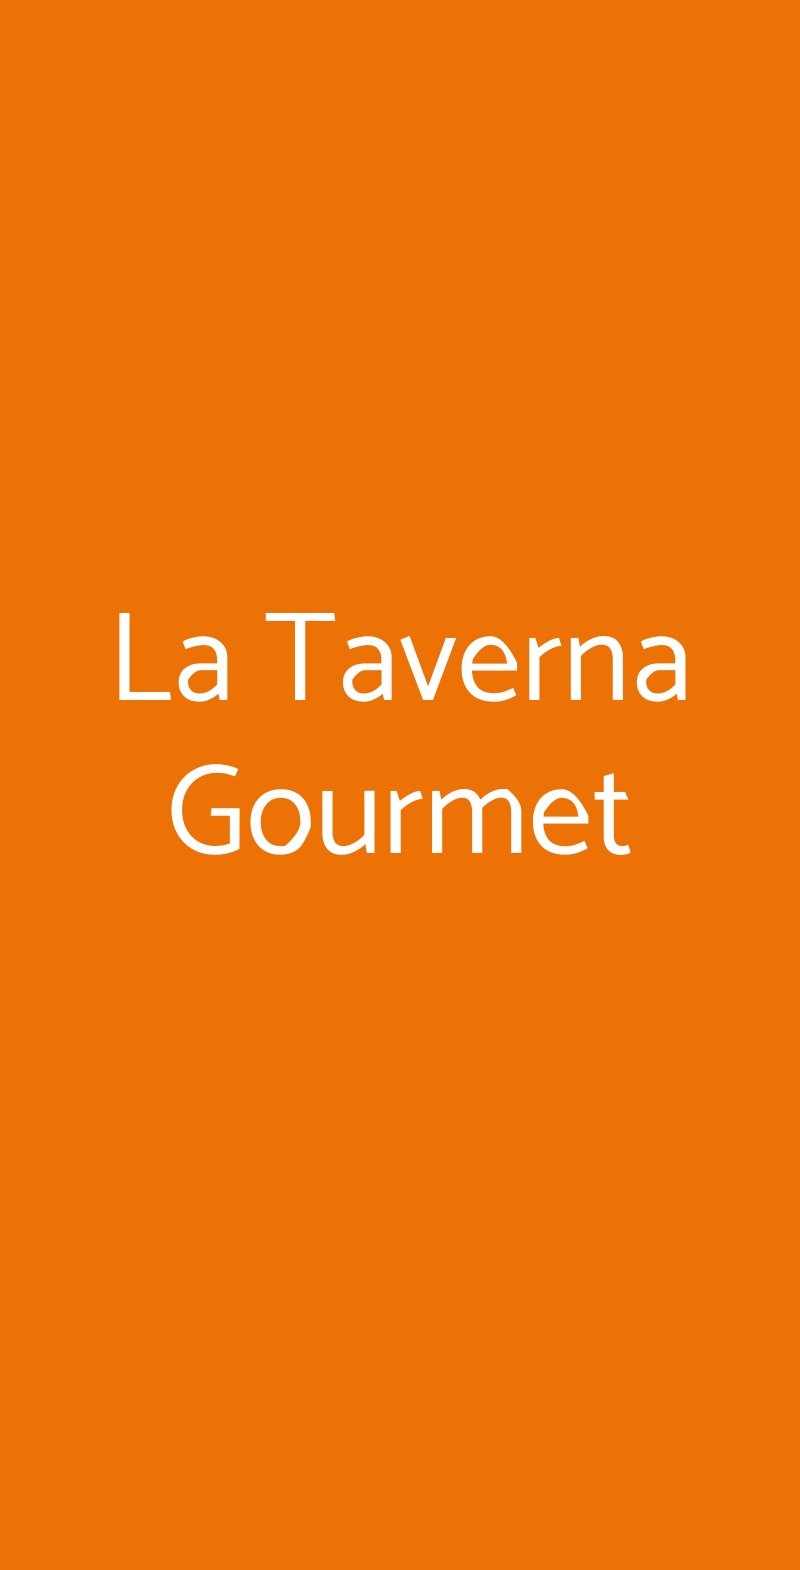 La Taverna Gourmet Milano menù 1 pagina